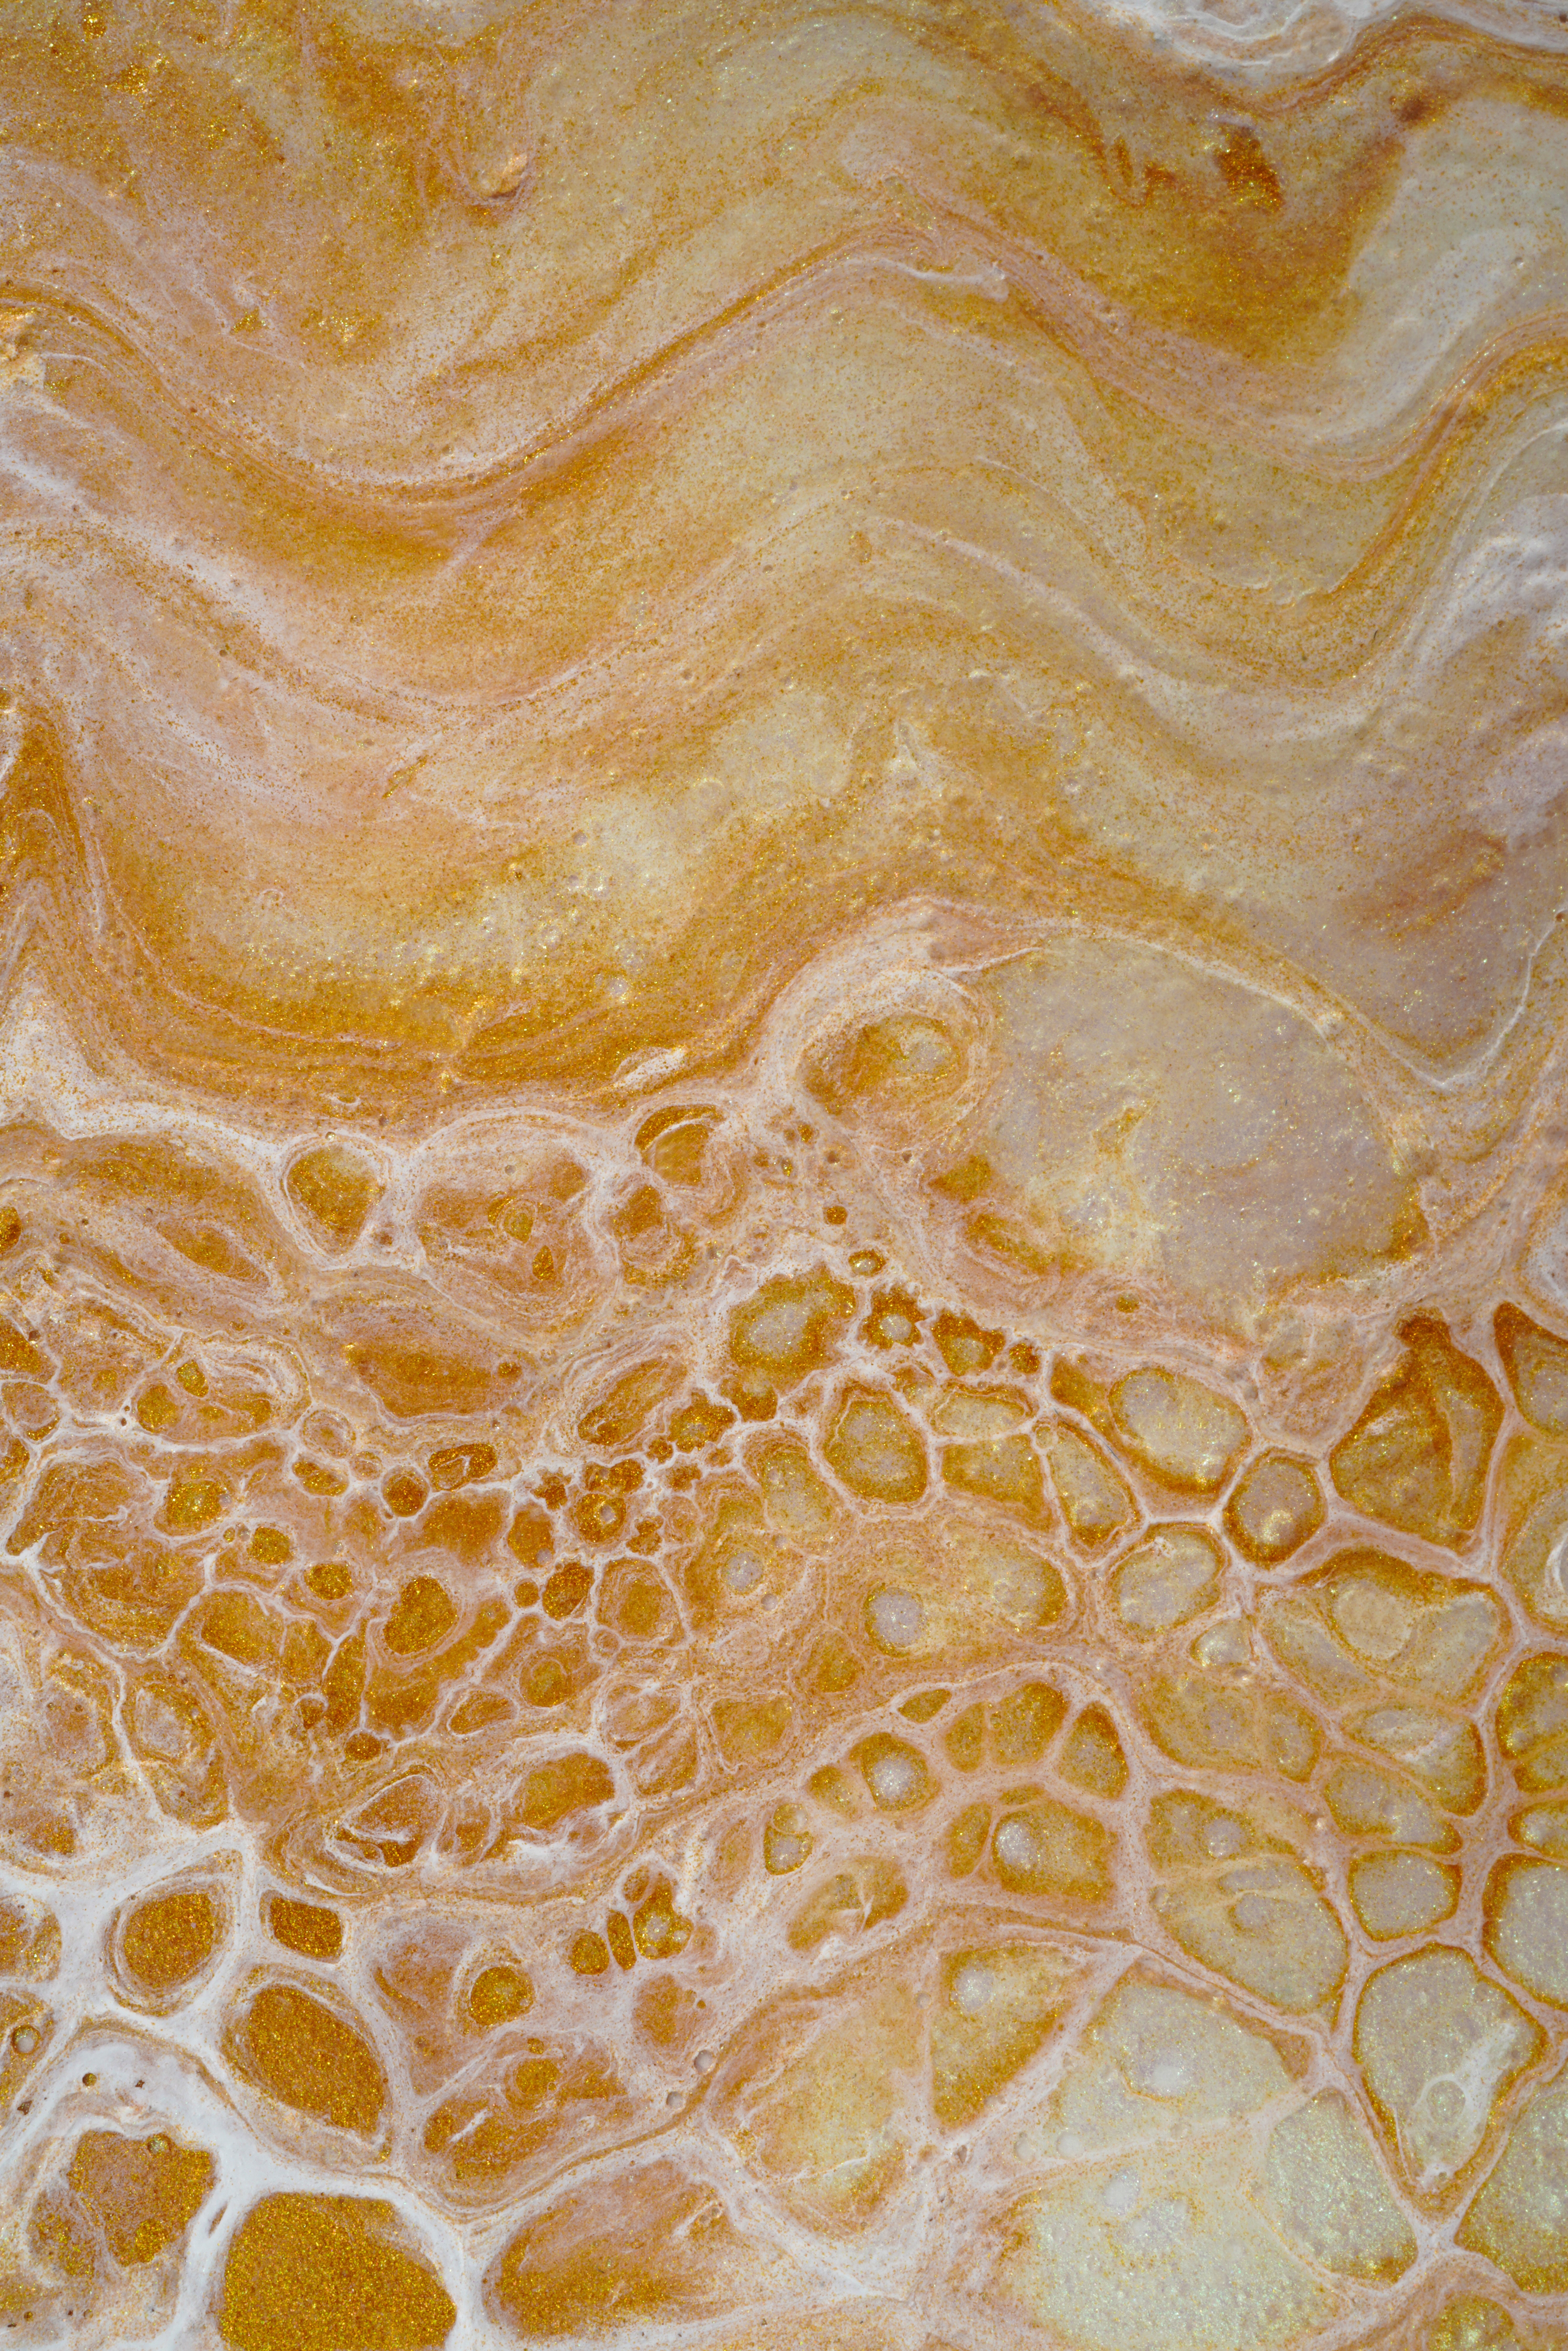 Yellow foam with gradient texture